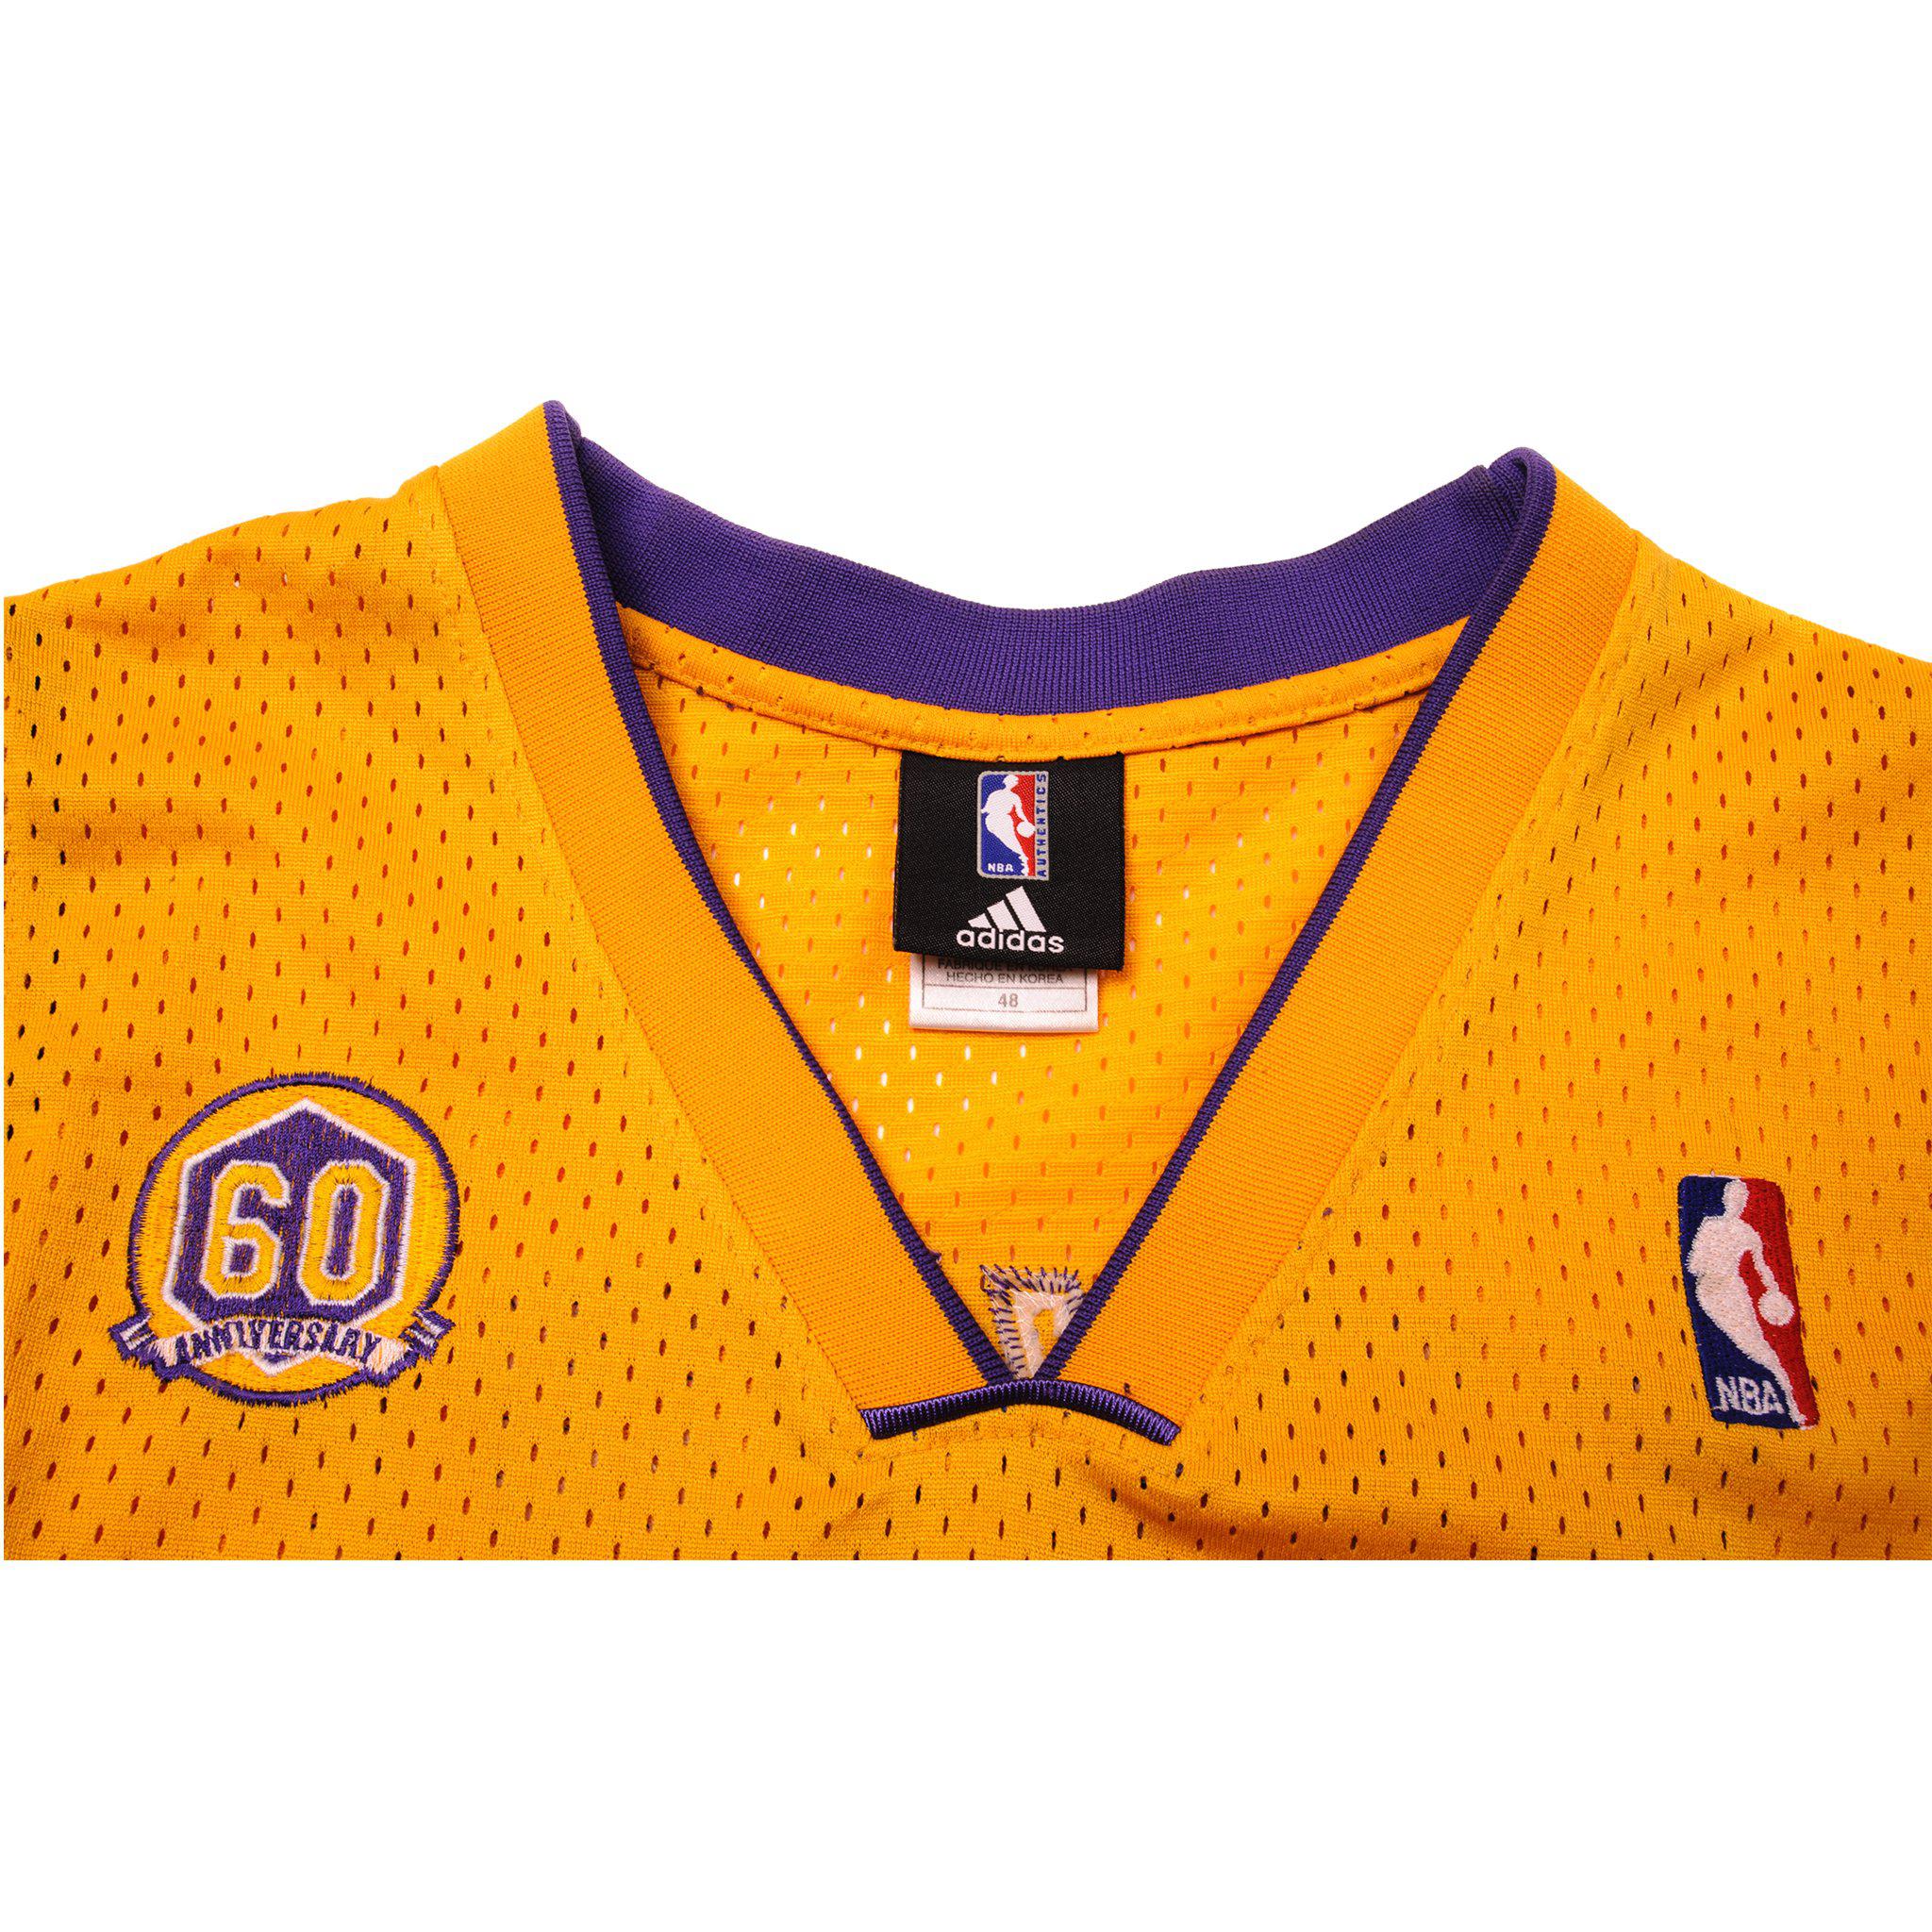 Adidas Los Angeles LA Lakers Kobe Bryant 24 60th Anniversary Jersey Yellow  52